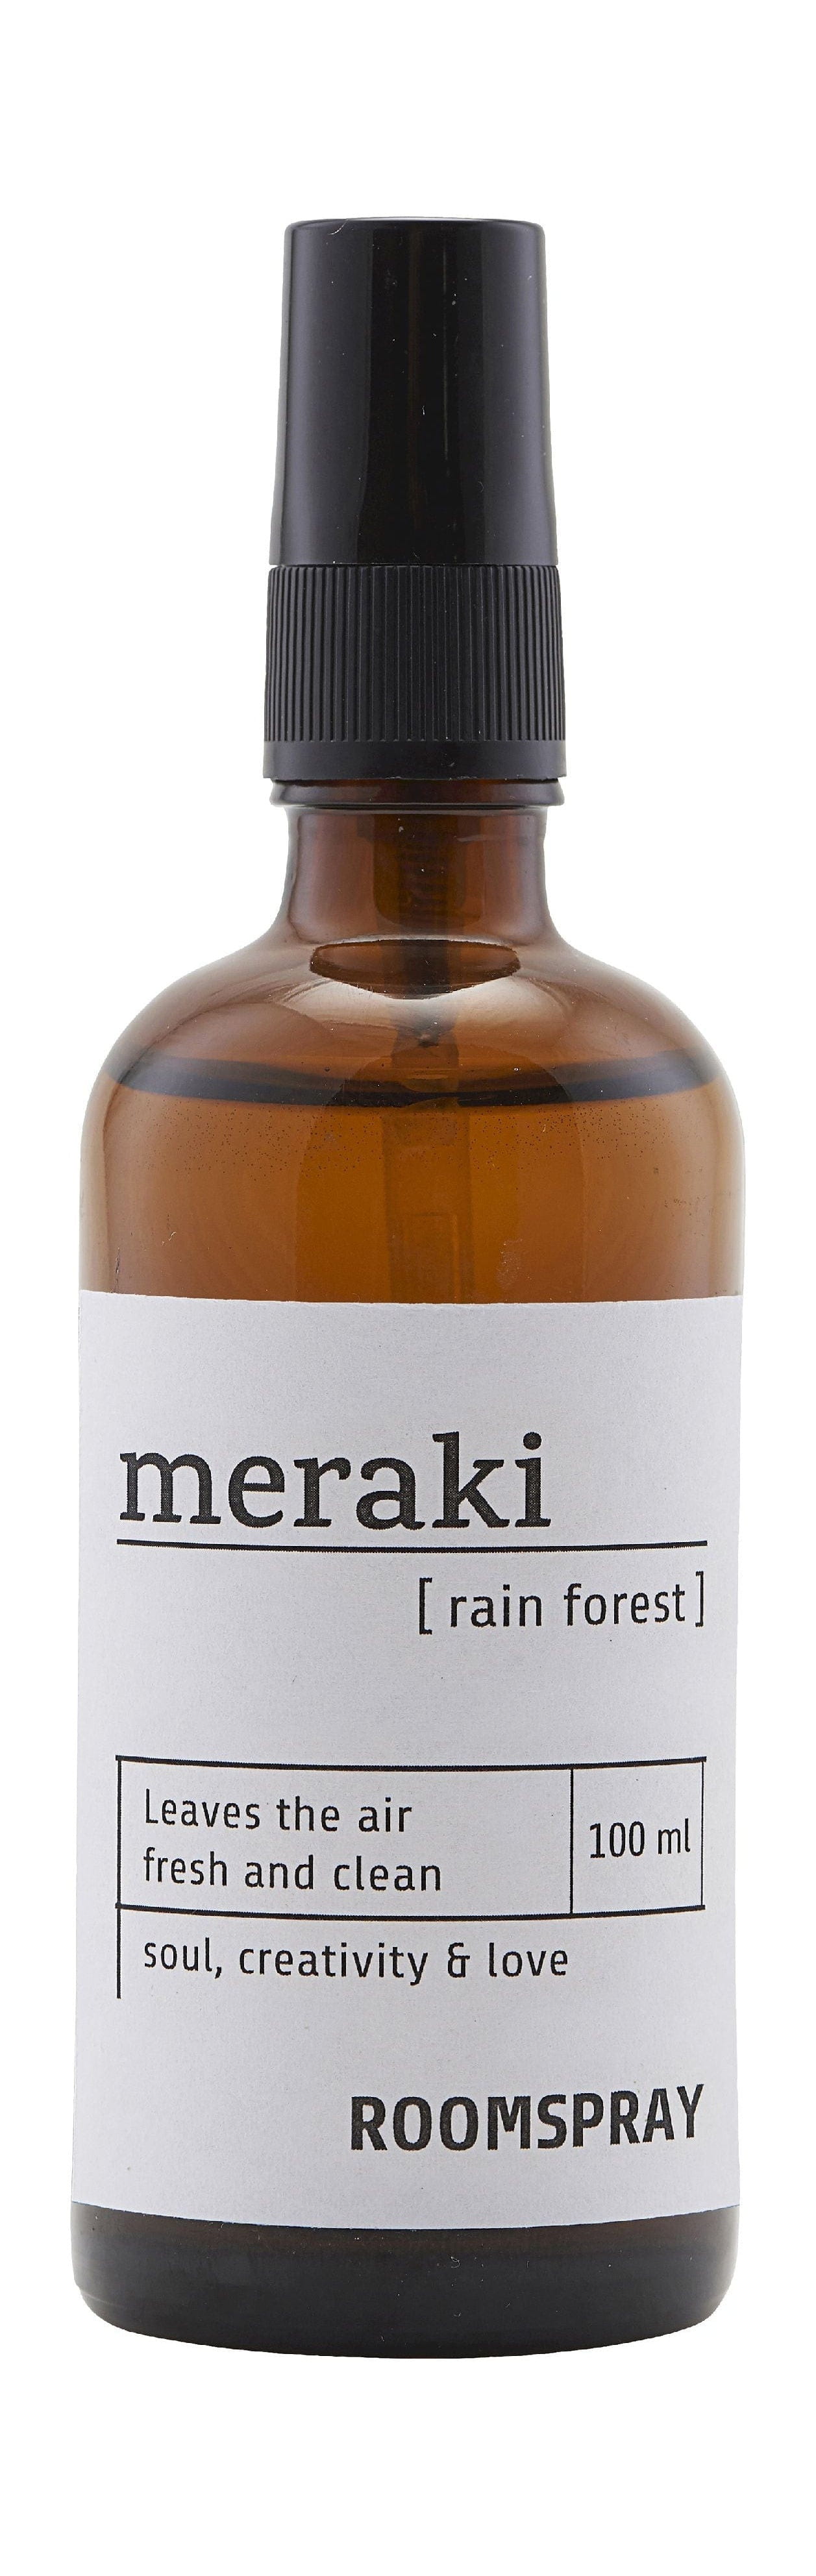 Meraki Spray de chambre 100 ml, forêt tropicale